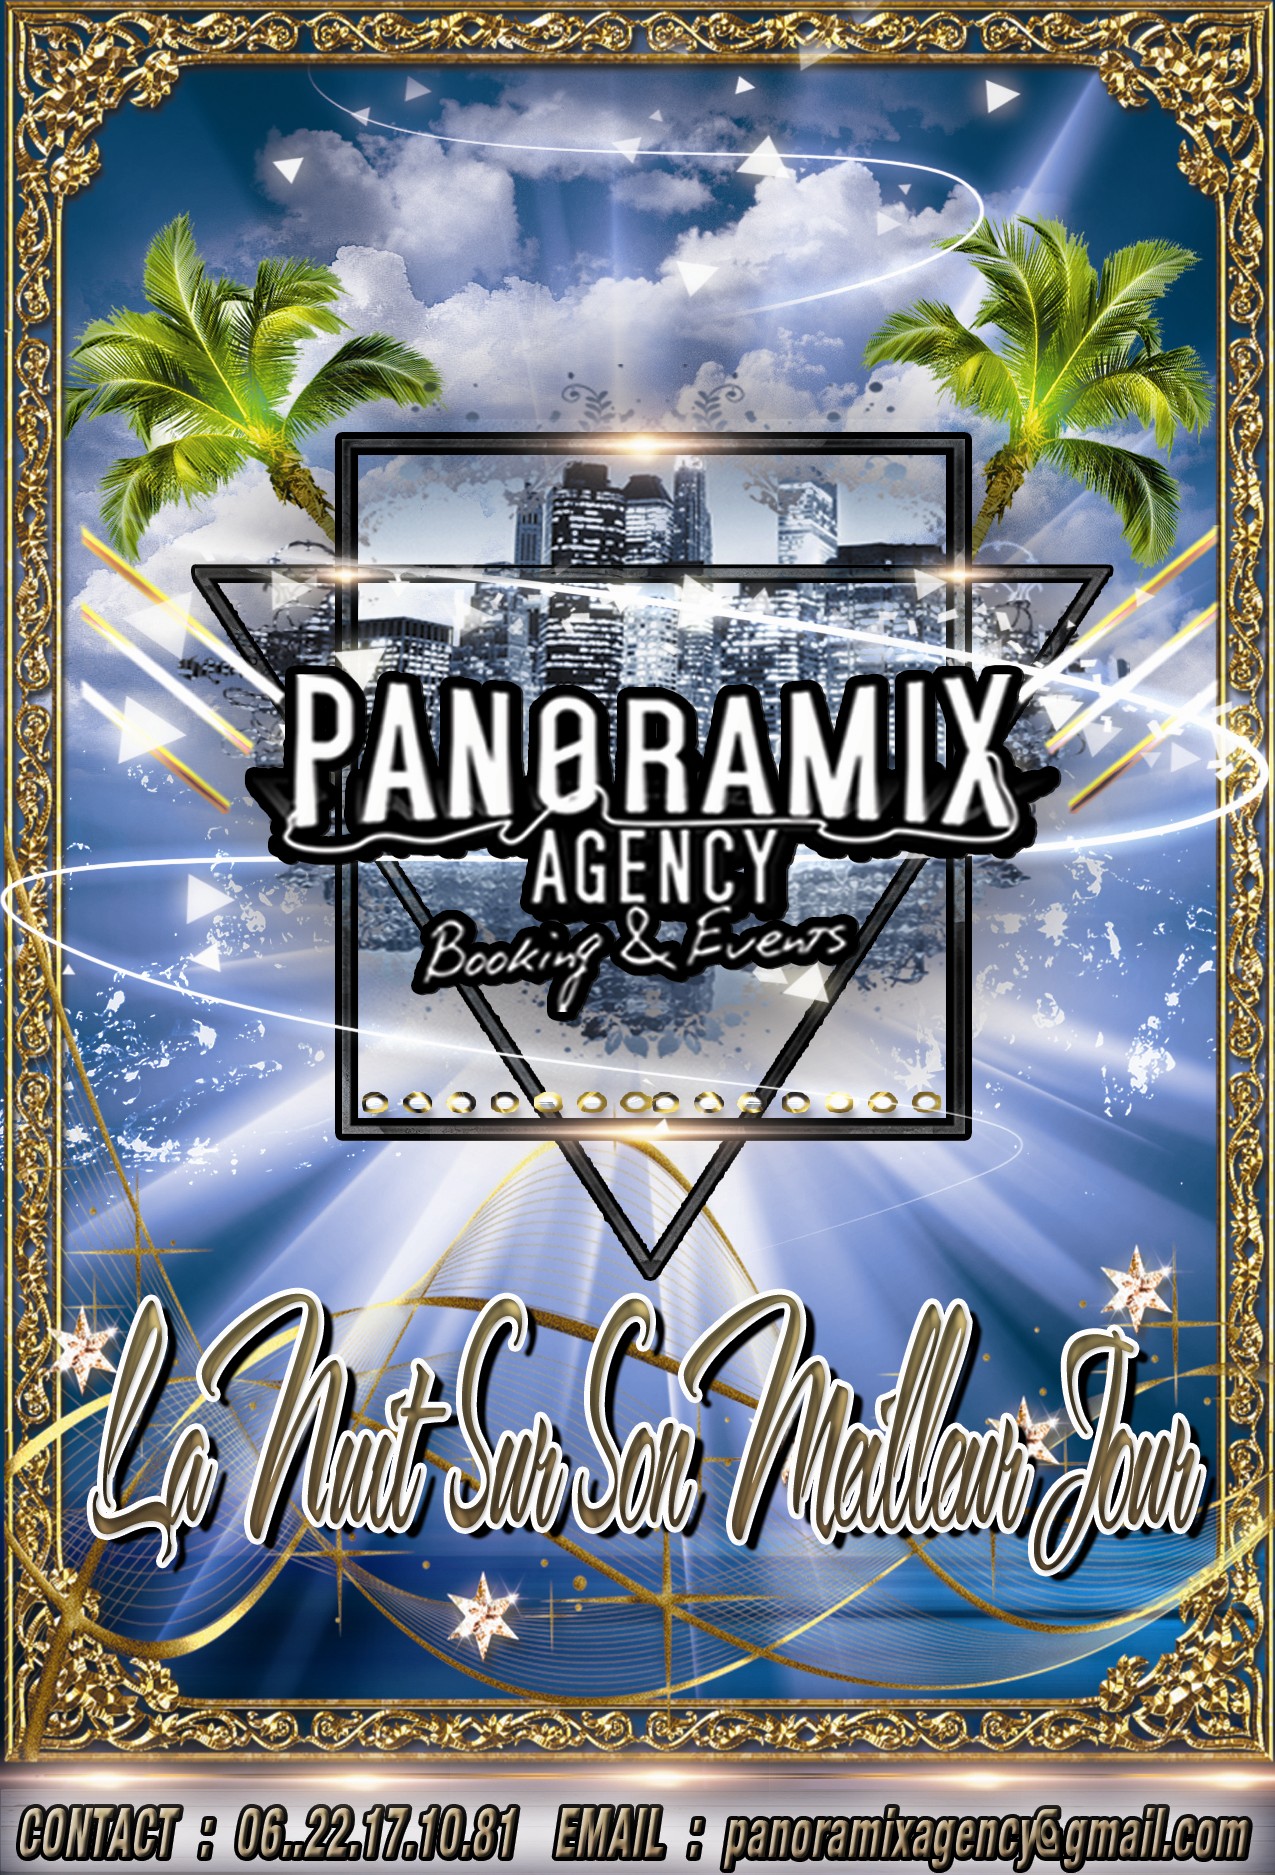 http://panoramix-radio-station.com/wp-content/uploads/2017/03/PANORAMIX-AGENCY-AFFICHE.jpg